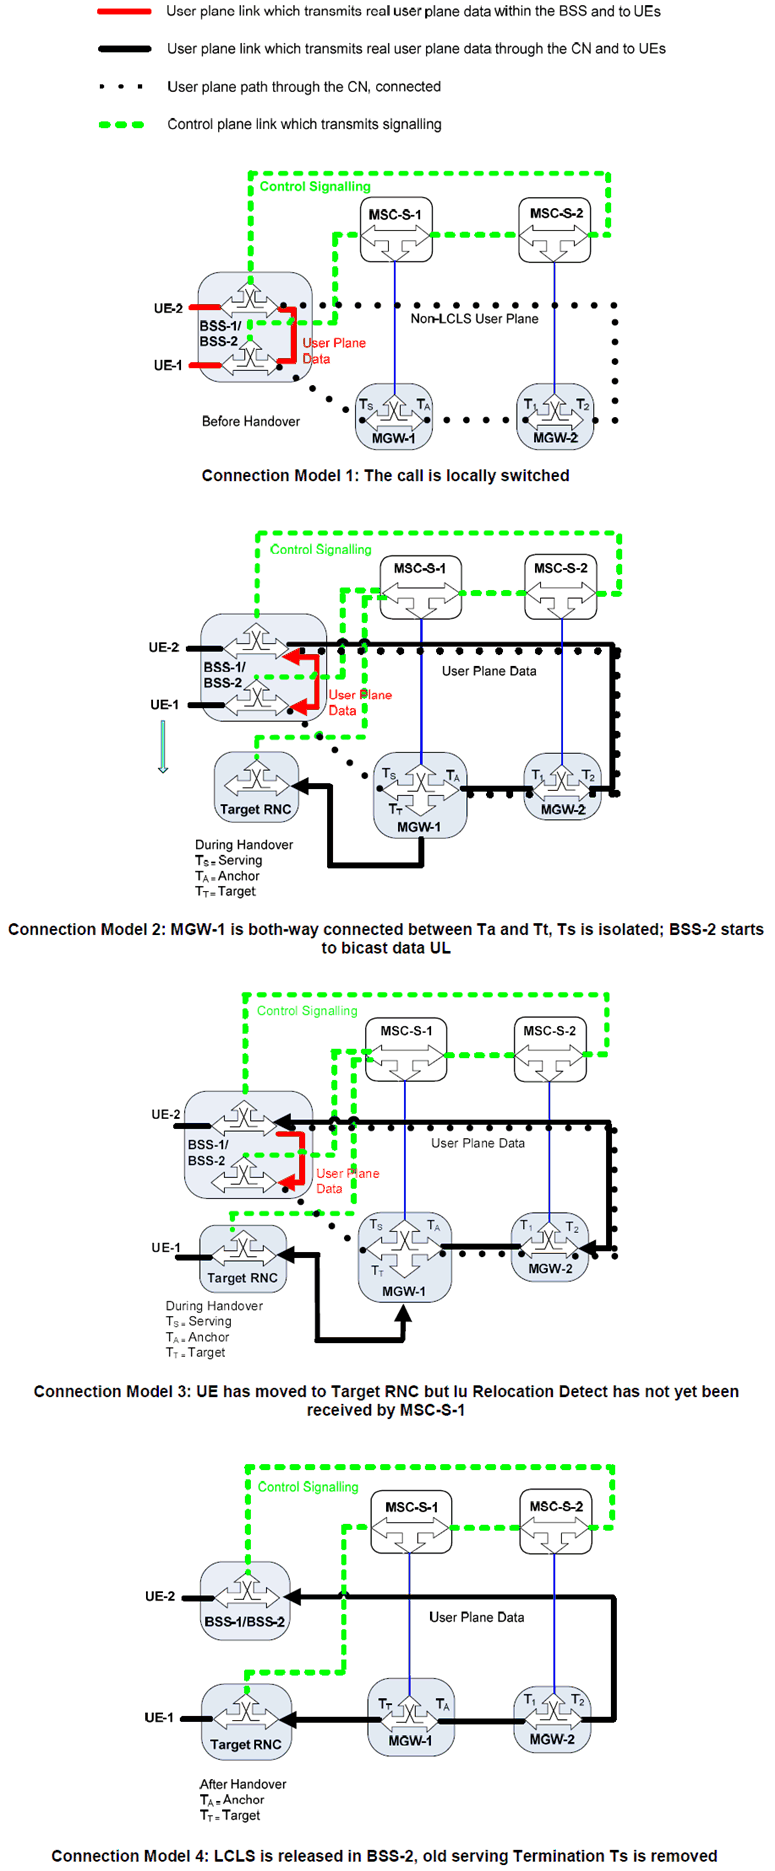 Copy of original 3GPP image for 3GPP TS 23.284, Fig. 8.3.1.6.1.1: Network model for Intra-MSC GSM to UMTS Handover that breaks LCLS